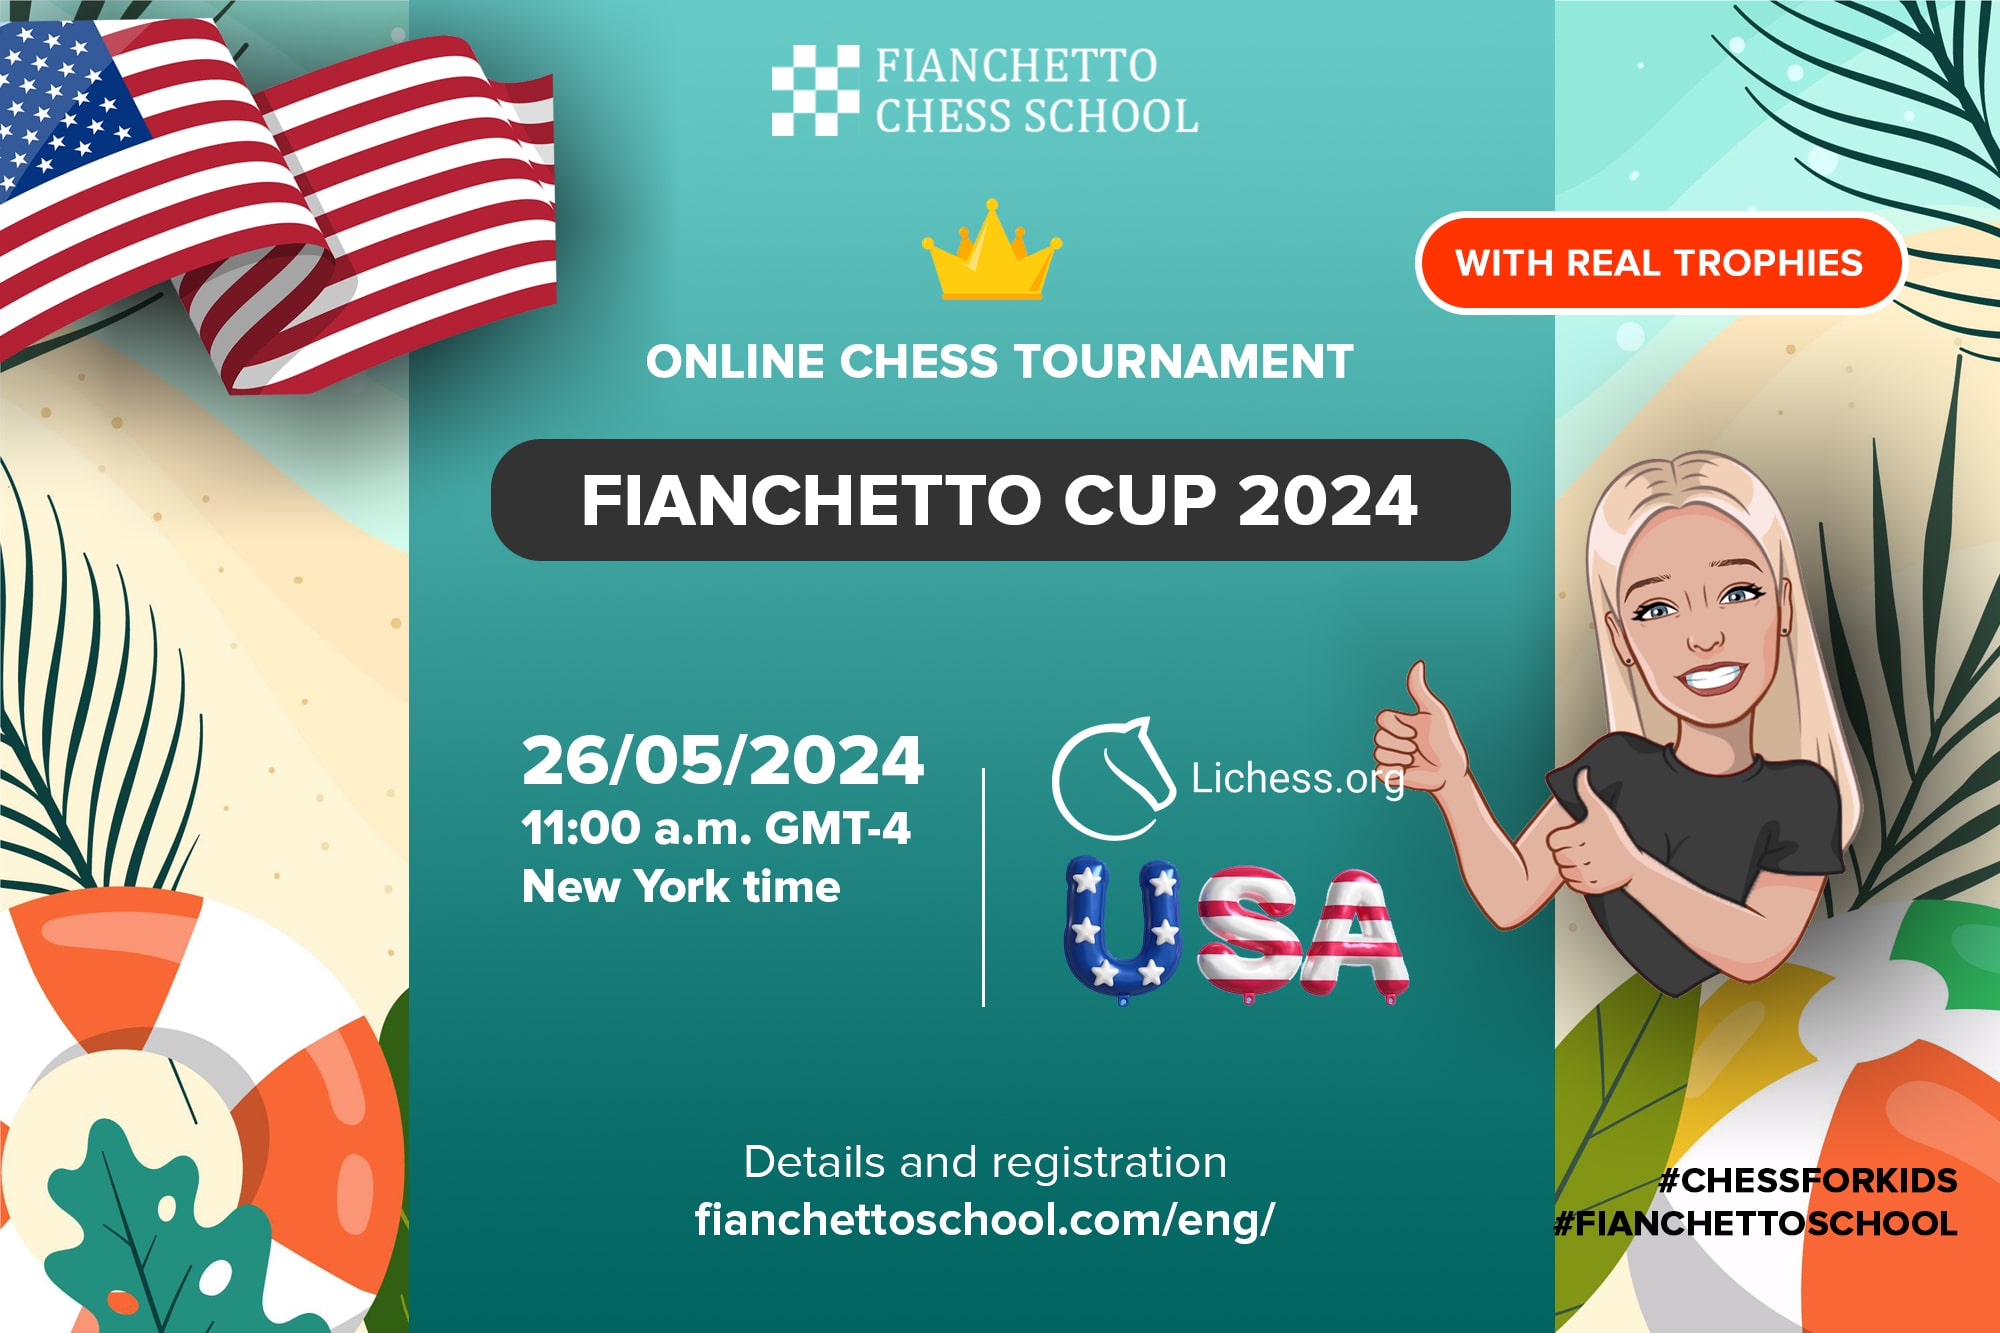 FIANCHETTO CUP 2024 USA